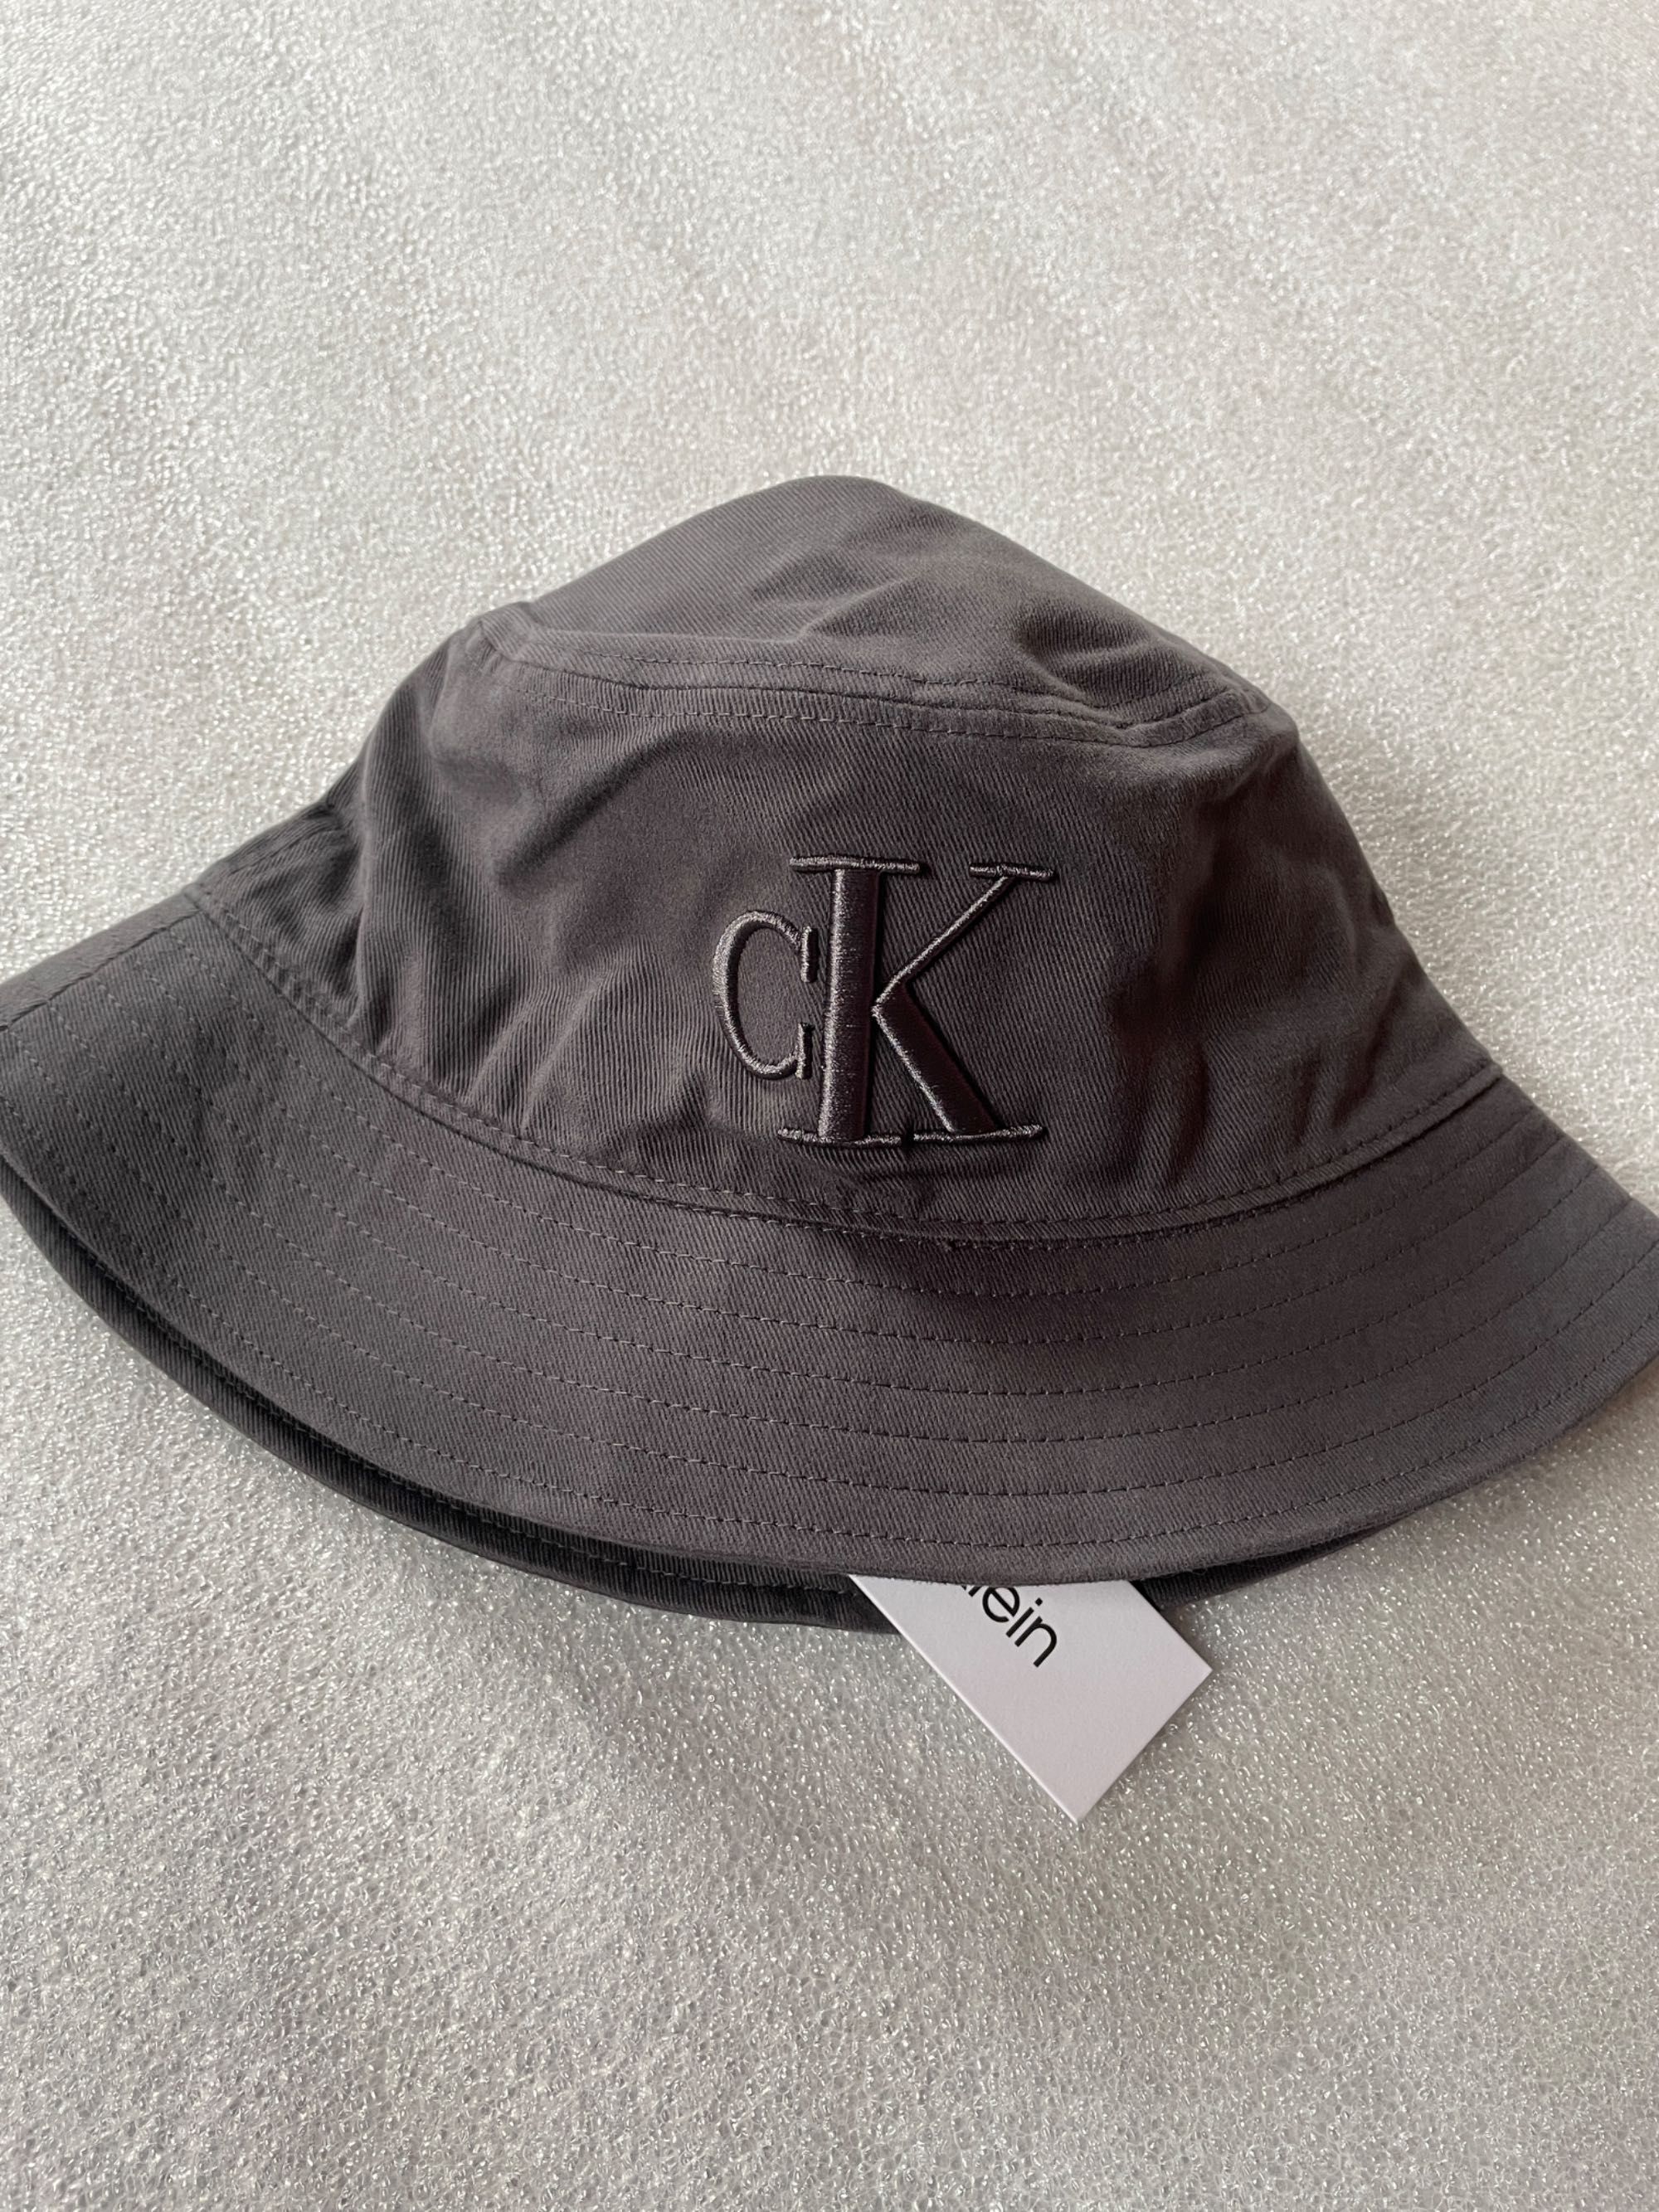 Новая шапка - панама calvin klein (ck twill logo bucket hat)с америки